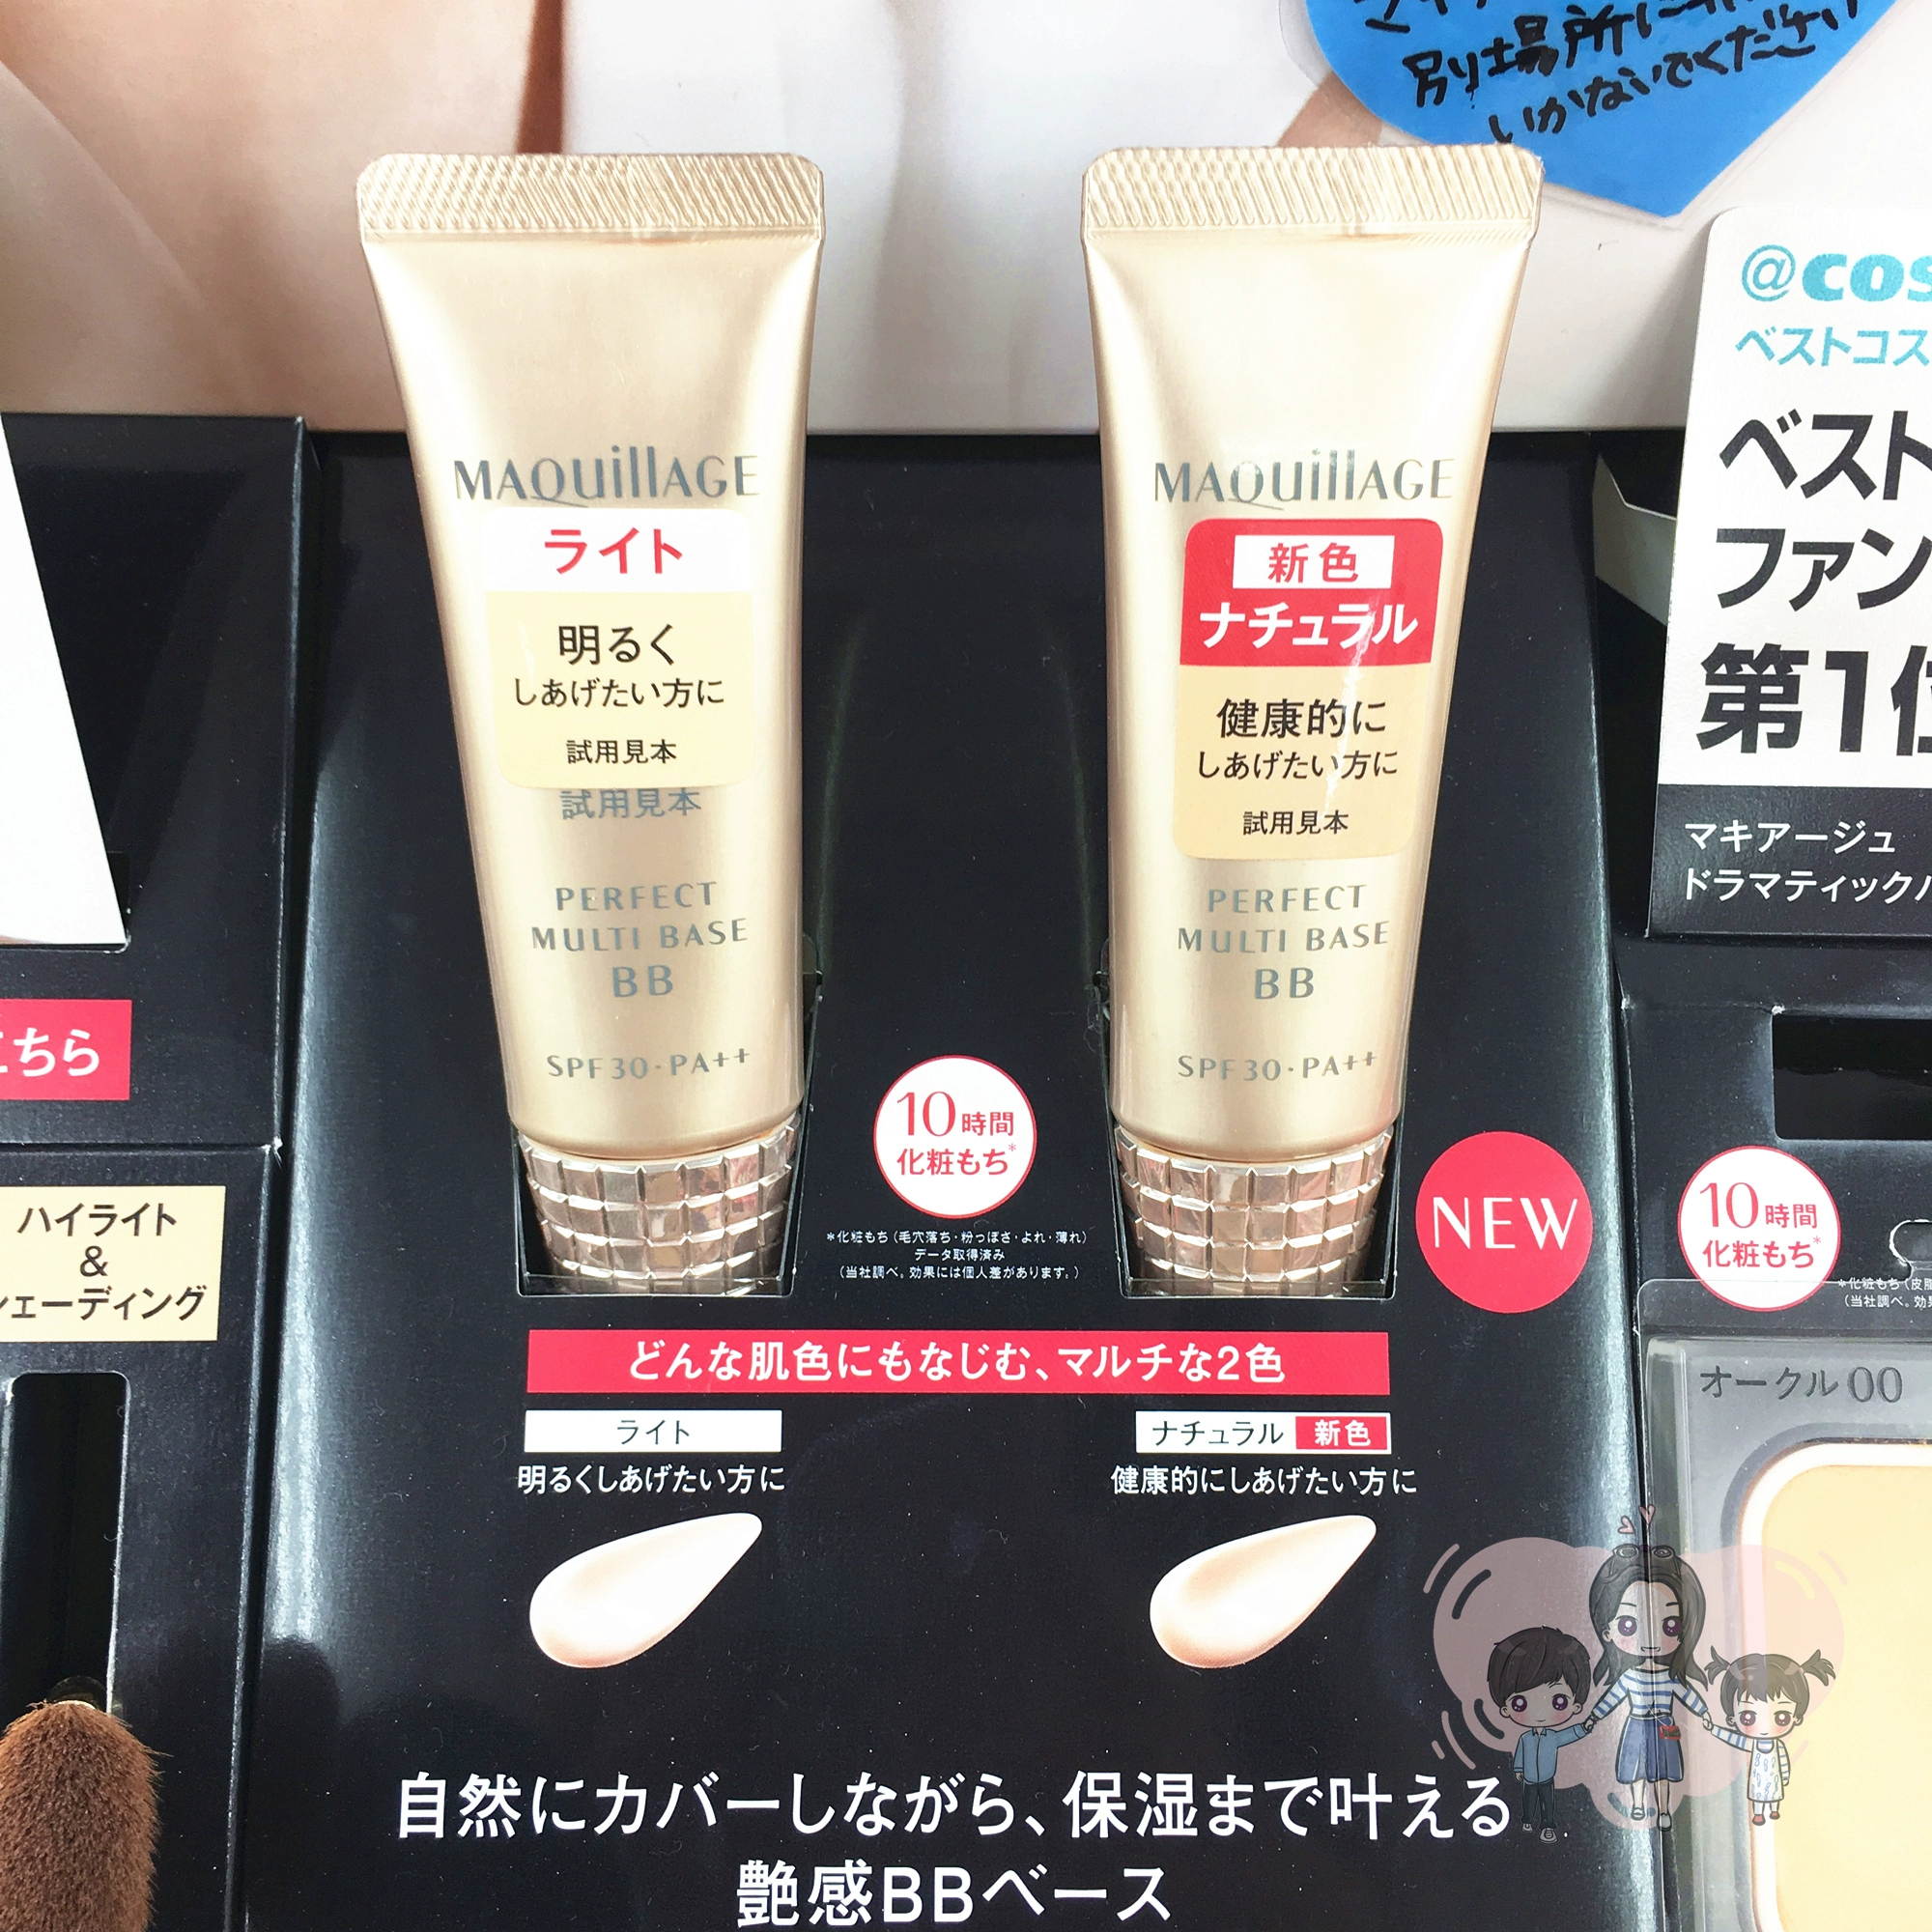 Dịch vụ mua sắm tại Nhật Bản gửi thư trực tiếp Shiseido MAQUILLAGE Scheming Beauty Moisturizing Pore Invisible Concealer Isolation BB Cream - Kem BB